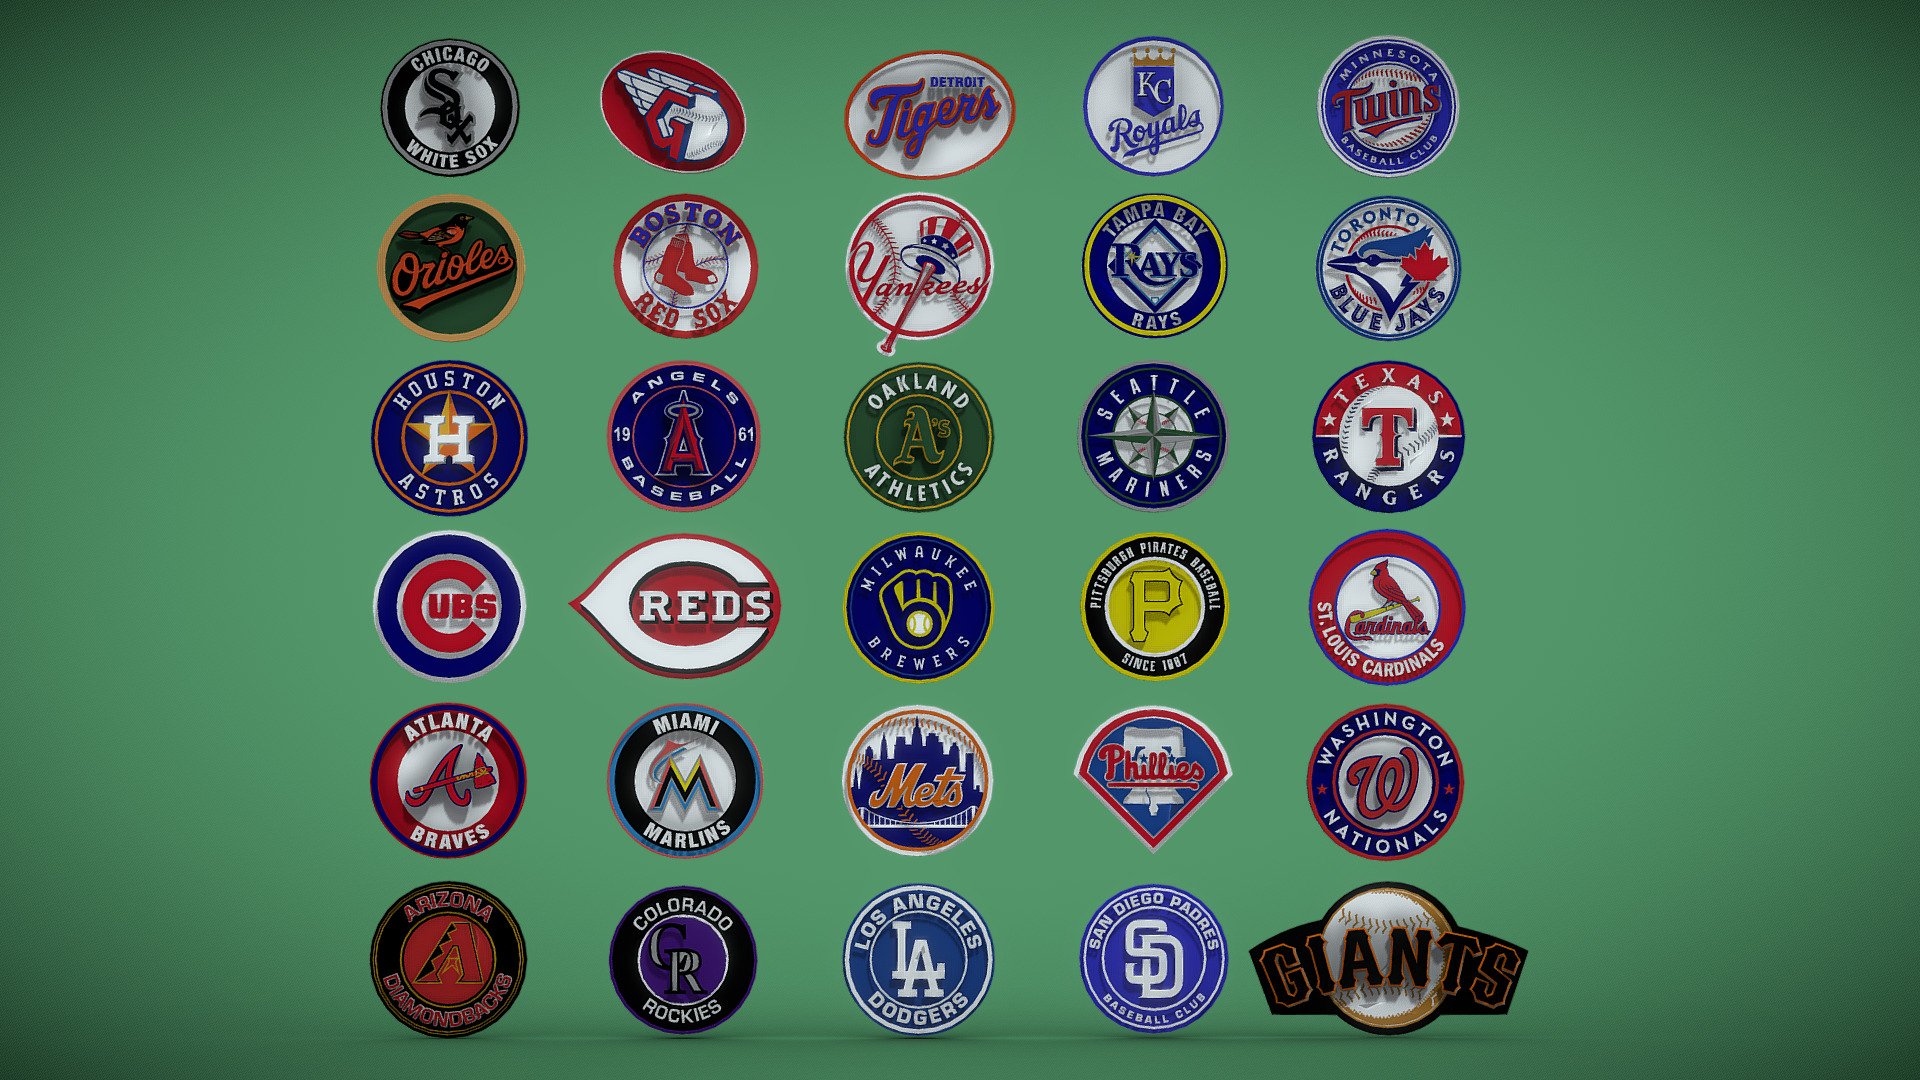 40,982 Baseball Team Logo Images, Stock Photos, 3D objects, & Vectors